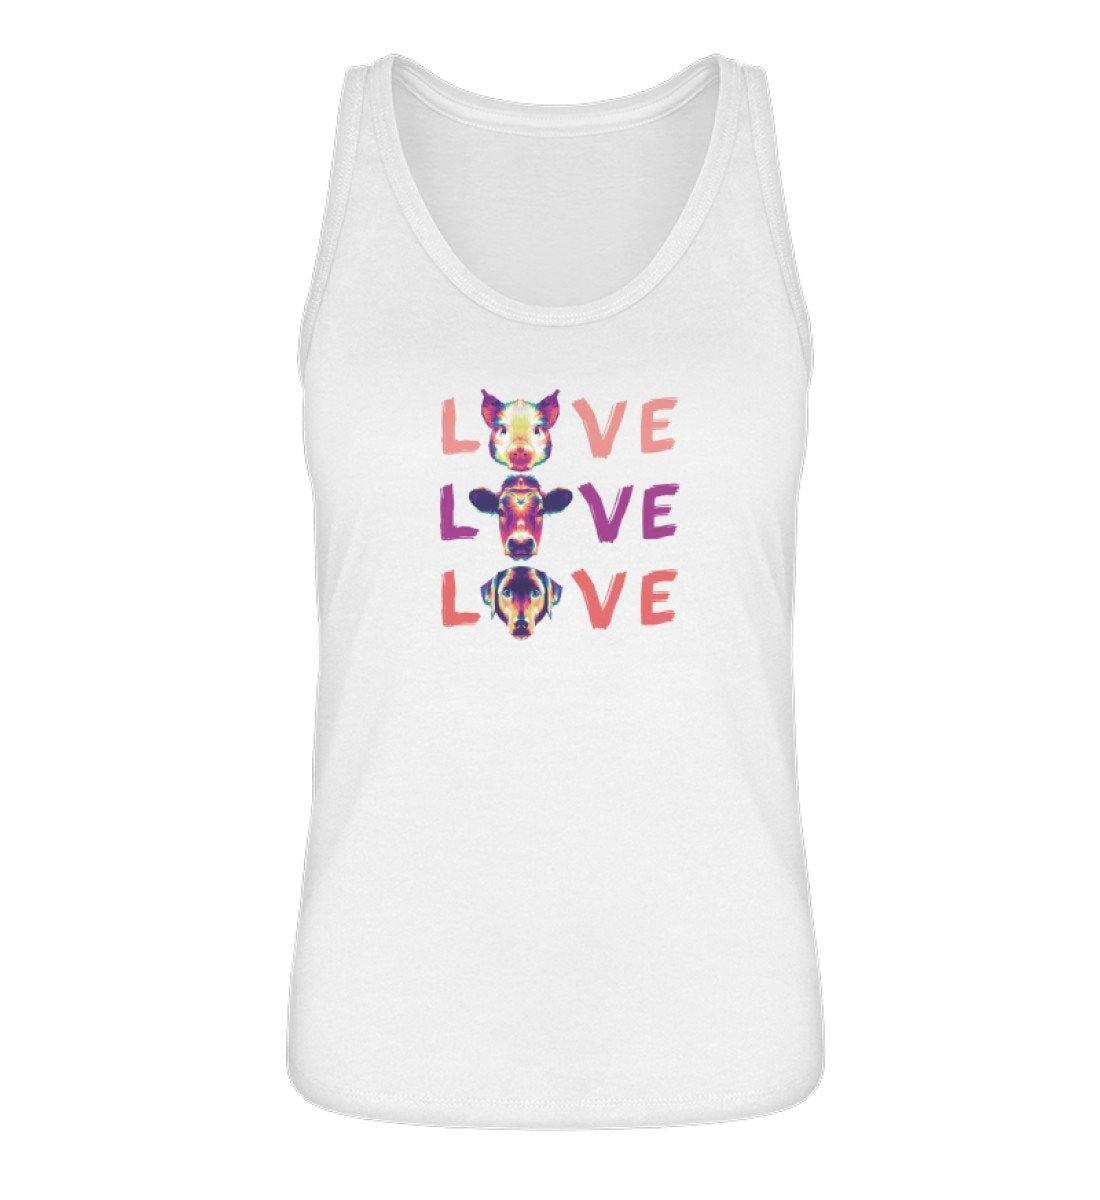 Love love love - Damen Organic Tanktop - Team Vegan © vegan t shirt